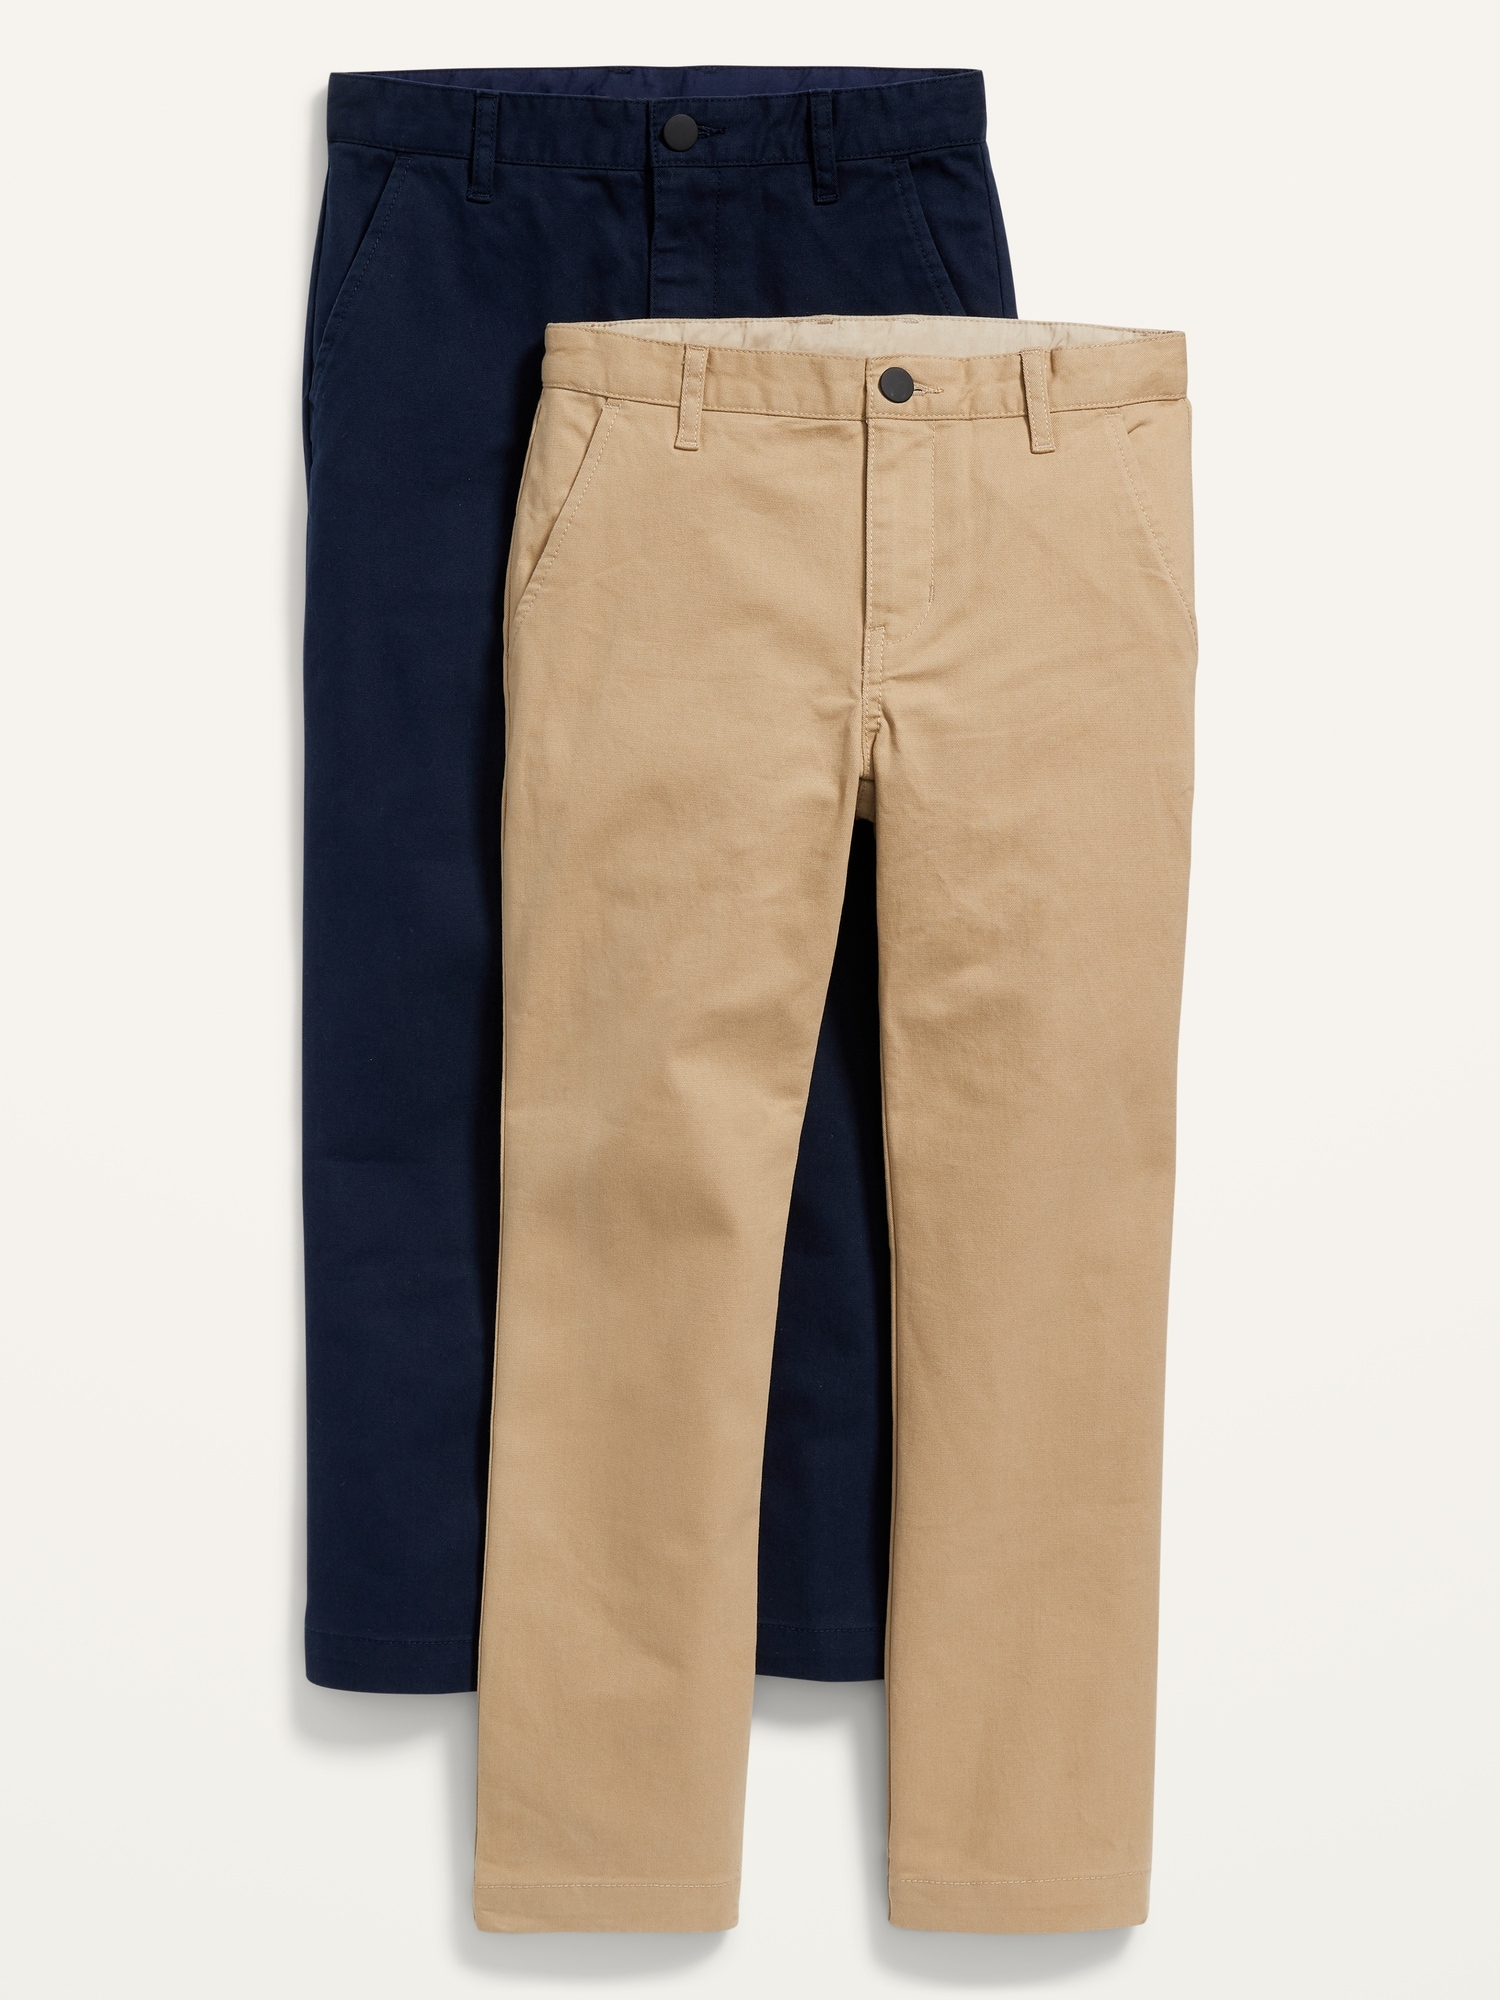 Old Navy Uniform Skinny Built-In Flex Chino Pants 2-Pack for Boys multi. 1